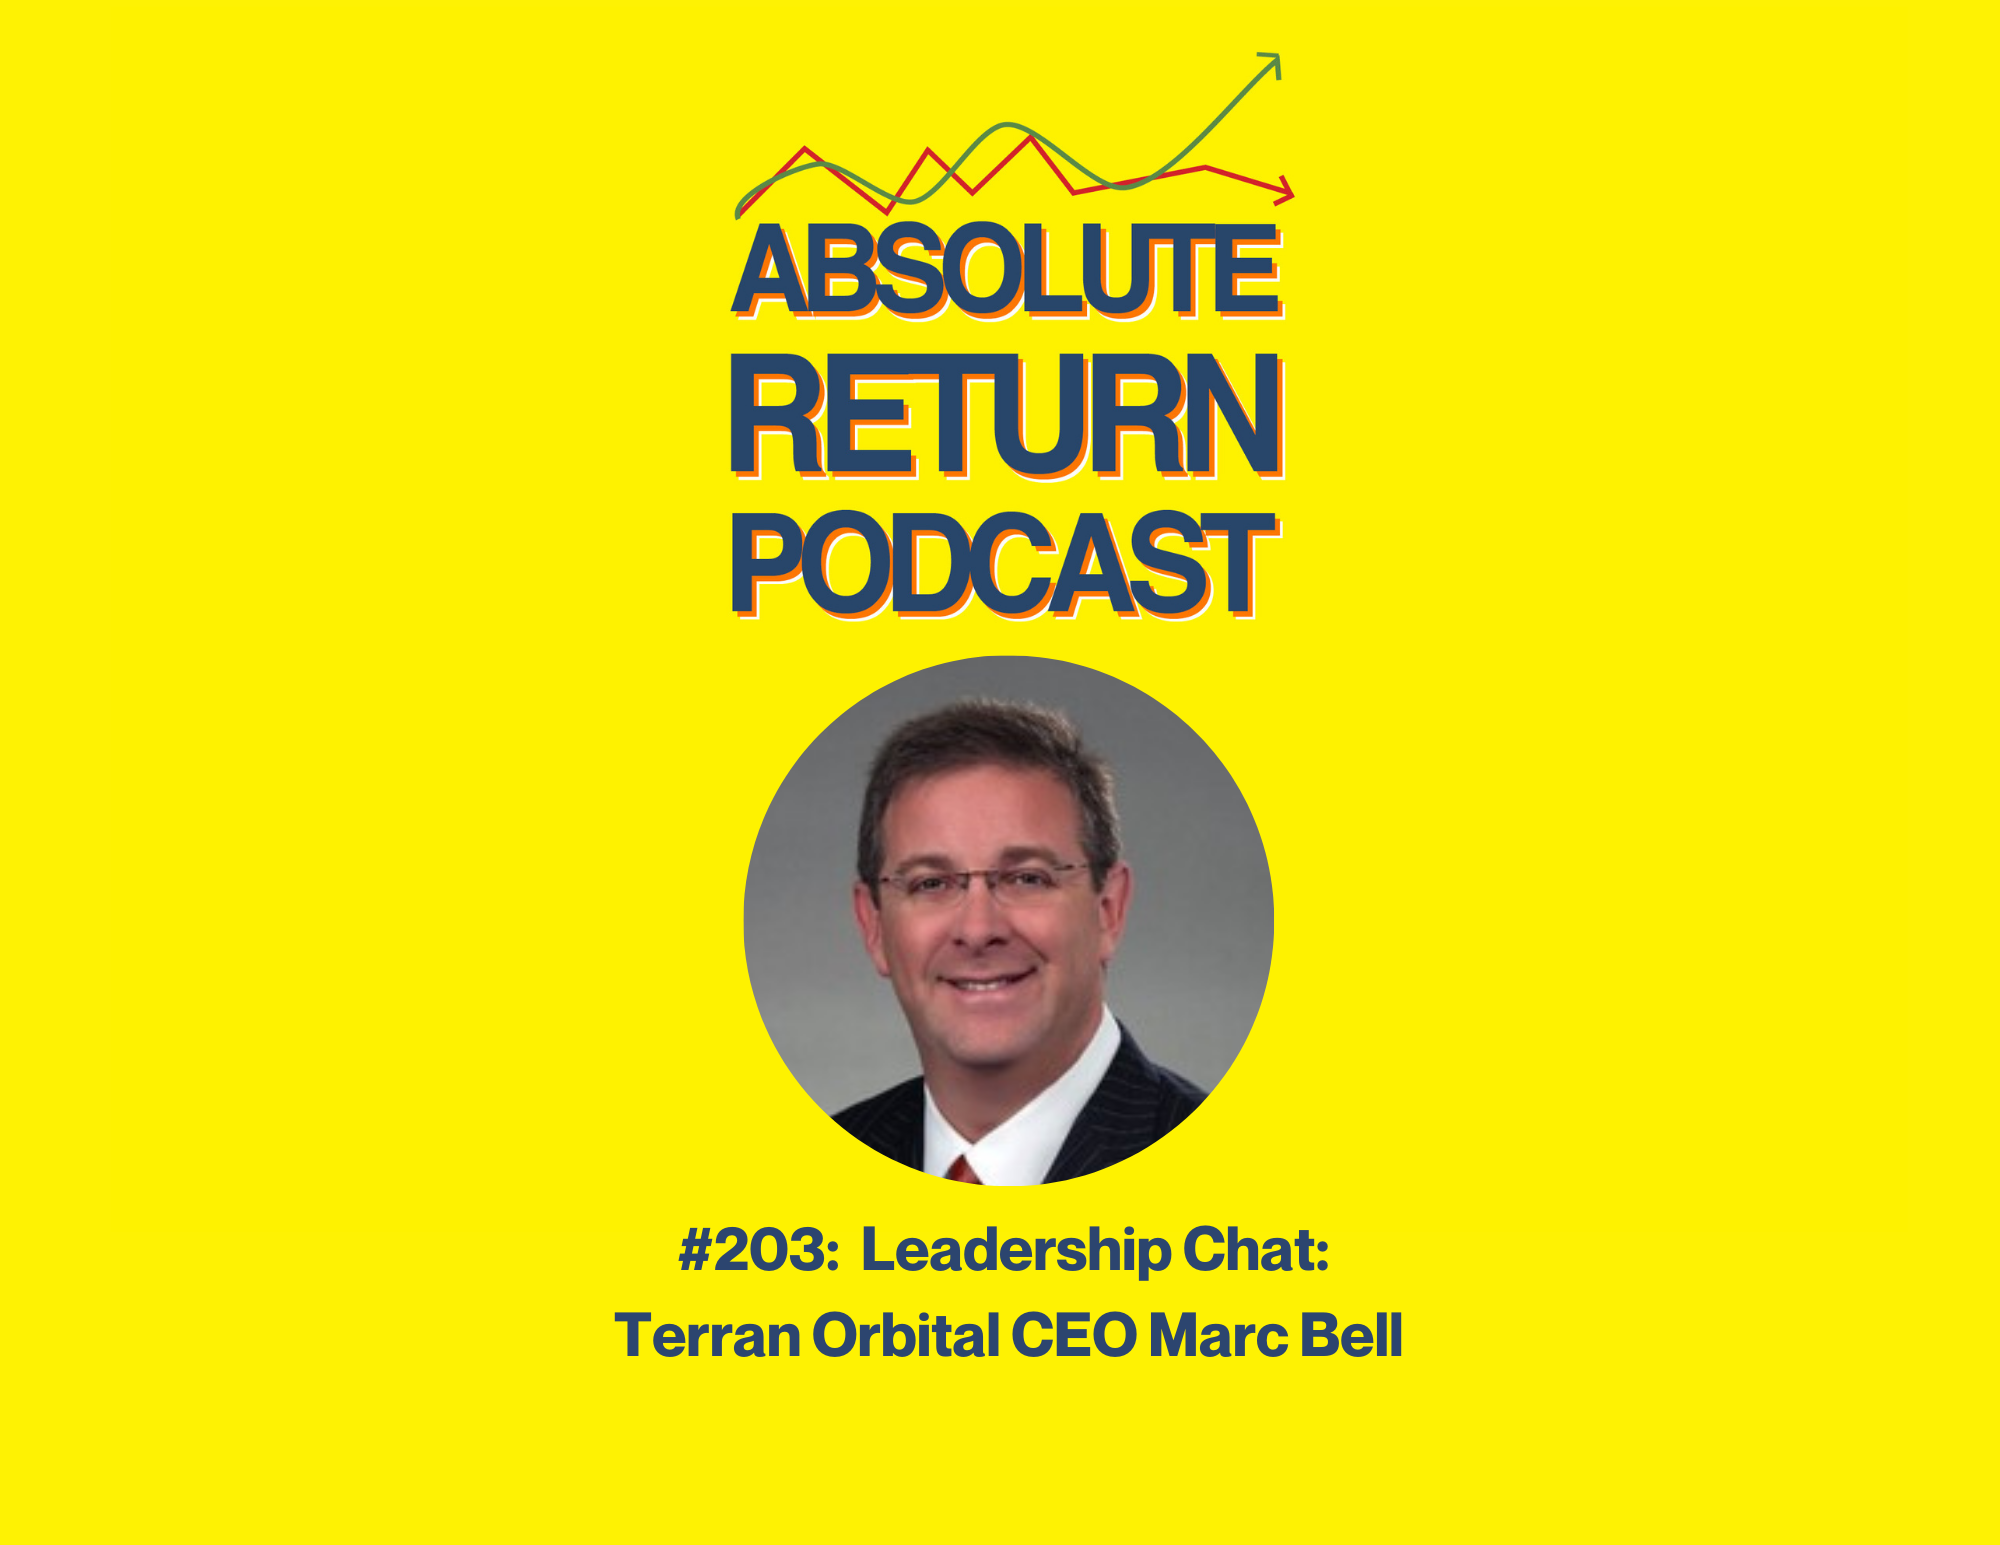 Absolute Return Podcast #203: Leadership Chat: Terran Orbital CEO Marc Bell